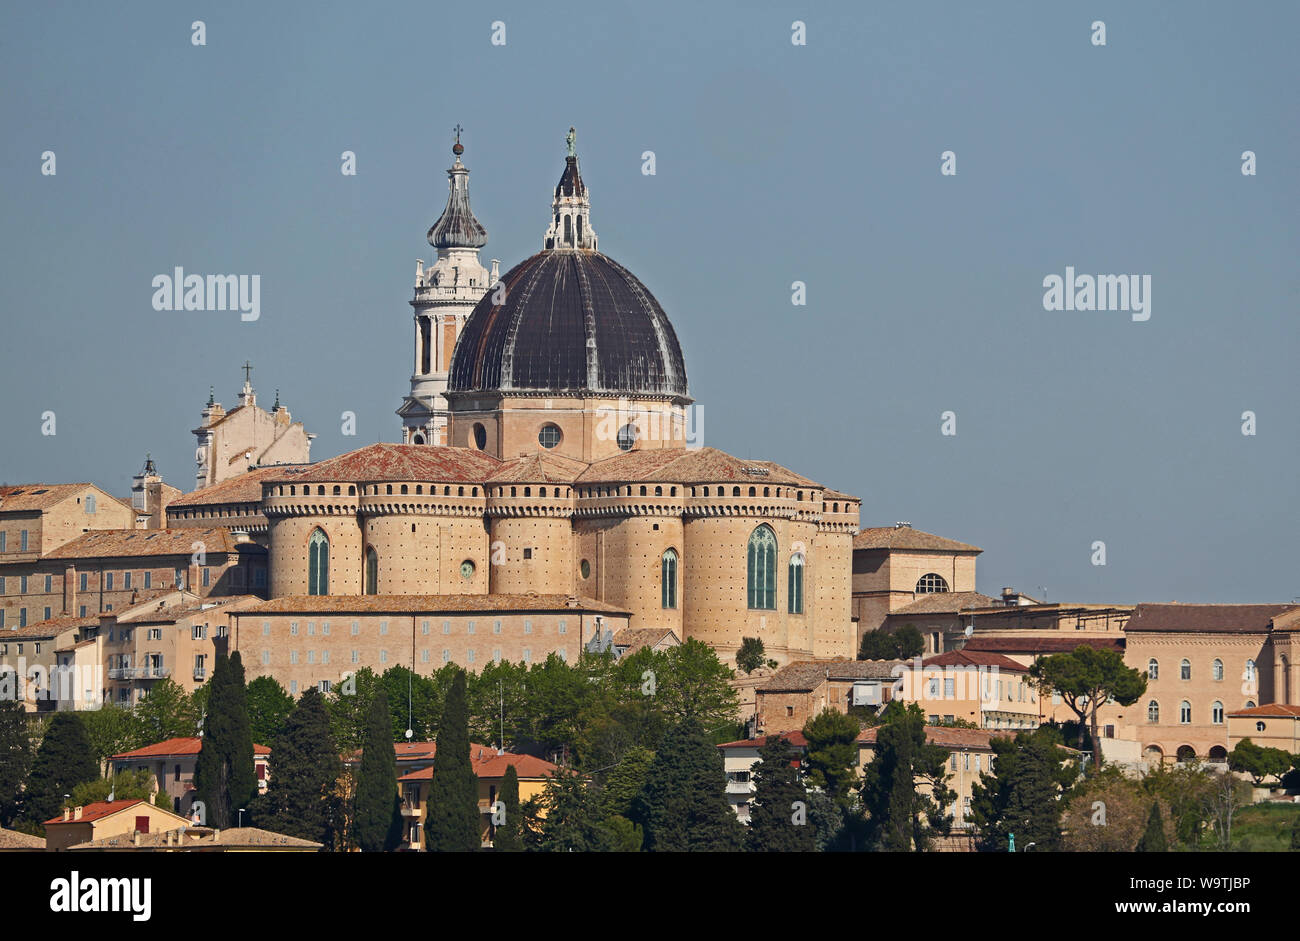 The basilica of the holy house or santuario della santa casa in Loreto province of Ancona in Le Marche Italy twinned with Lourdes Stock Photo